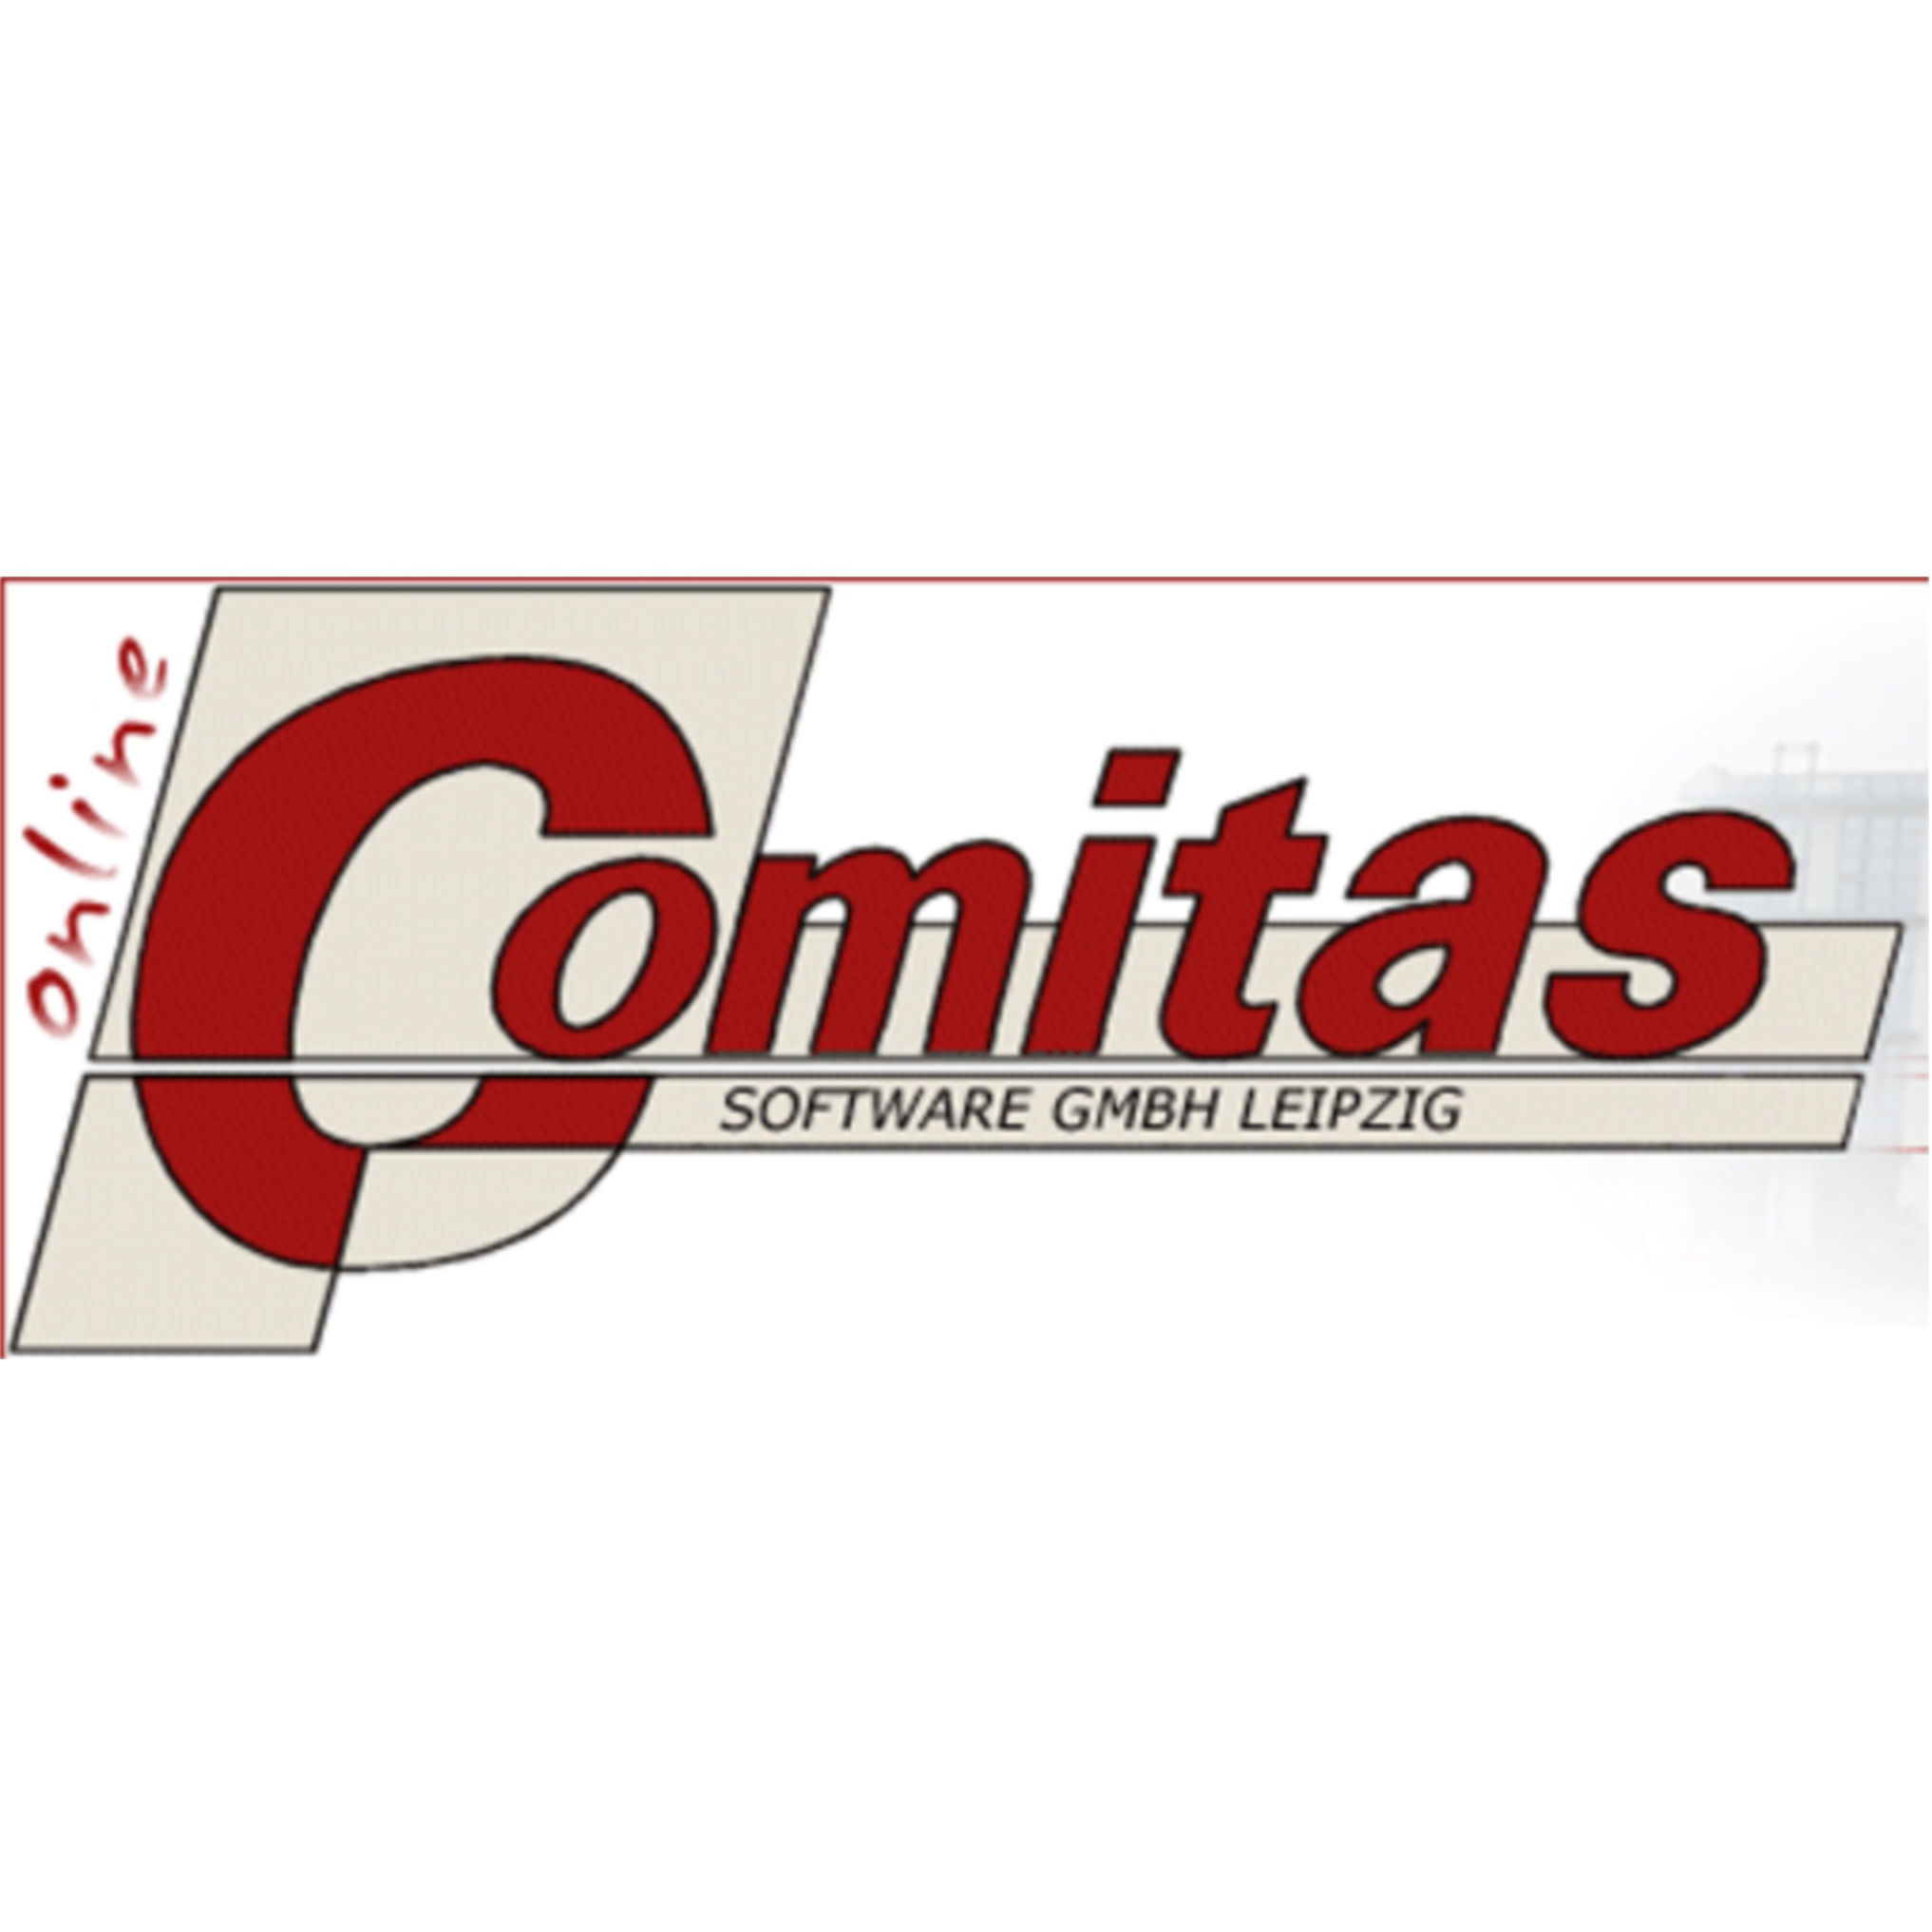 Logo Comitas Software GmbH Leipzig